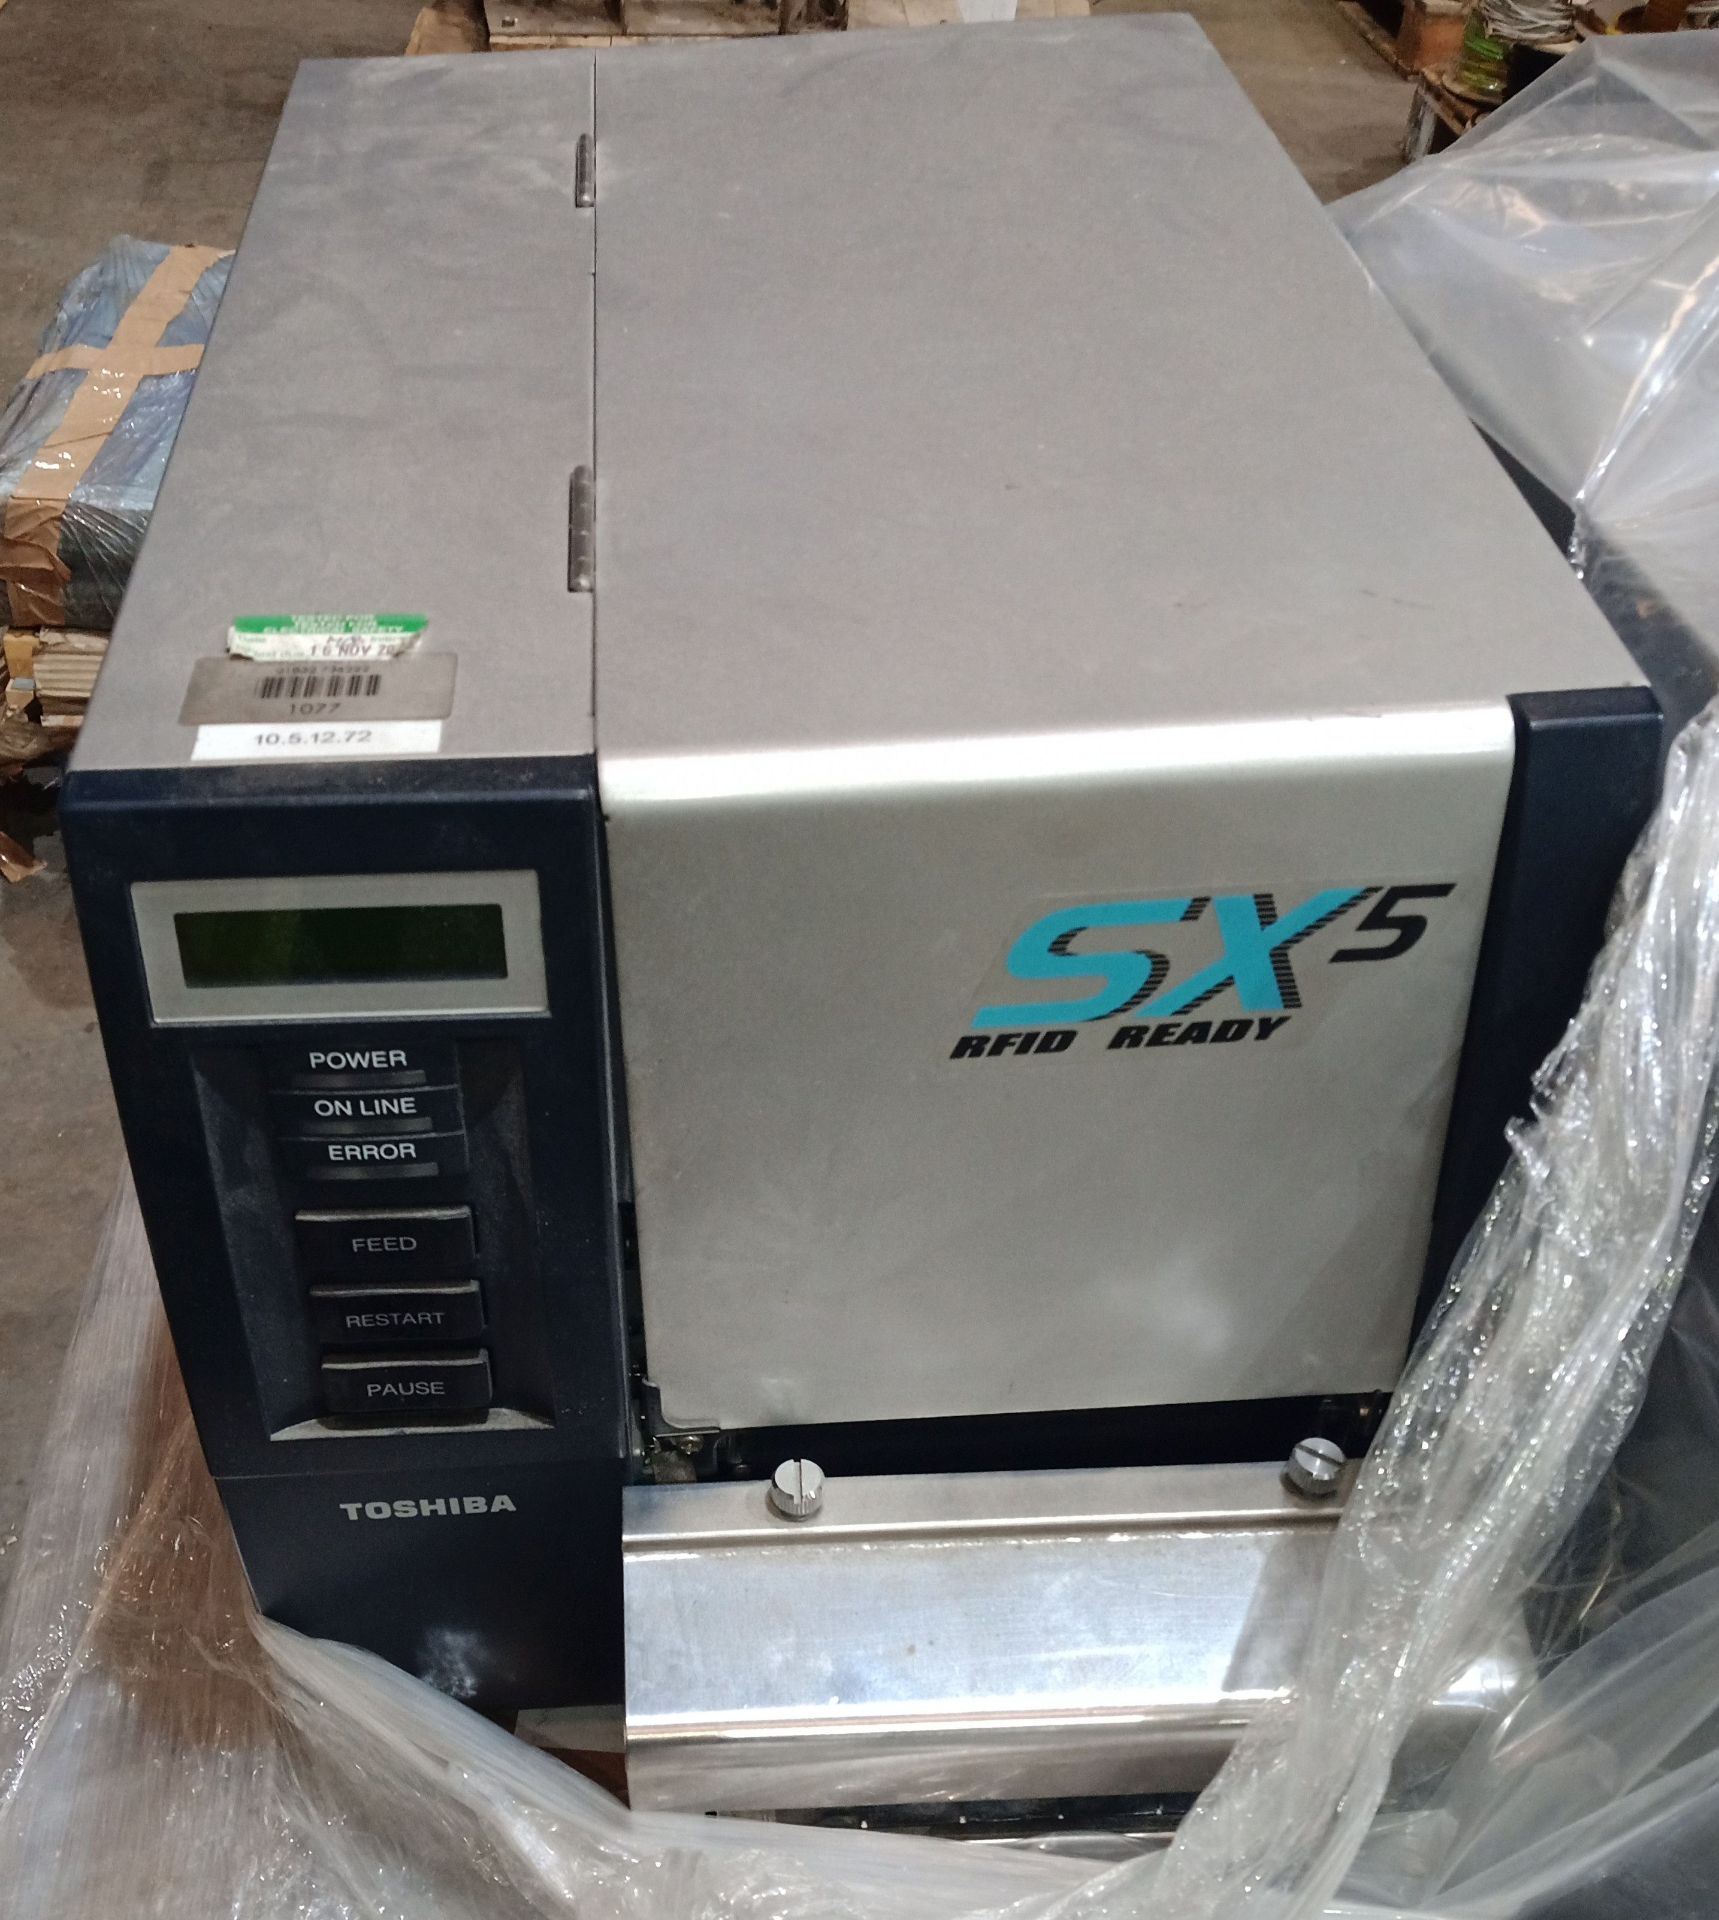 * Toshiba B-SX5T—TS22-QM-R Label Printer, serial no. 2600D500899 Lot located at the Gold Line